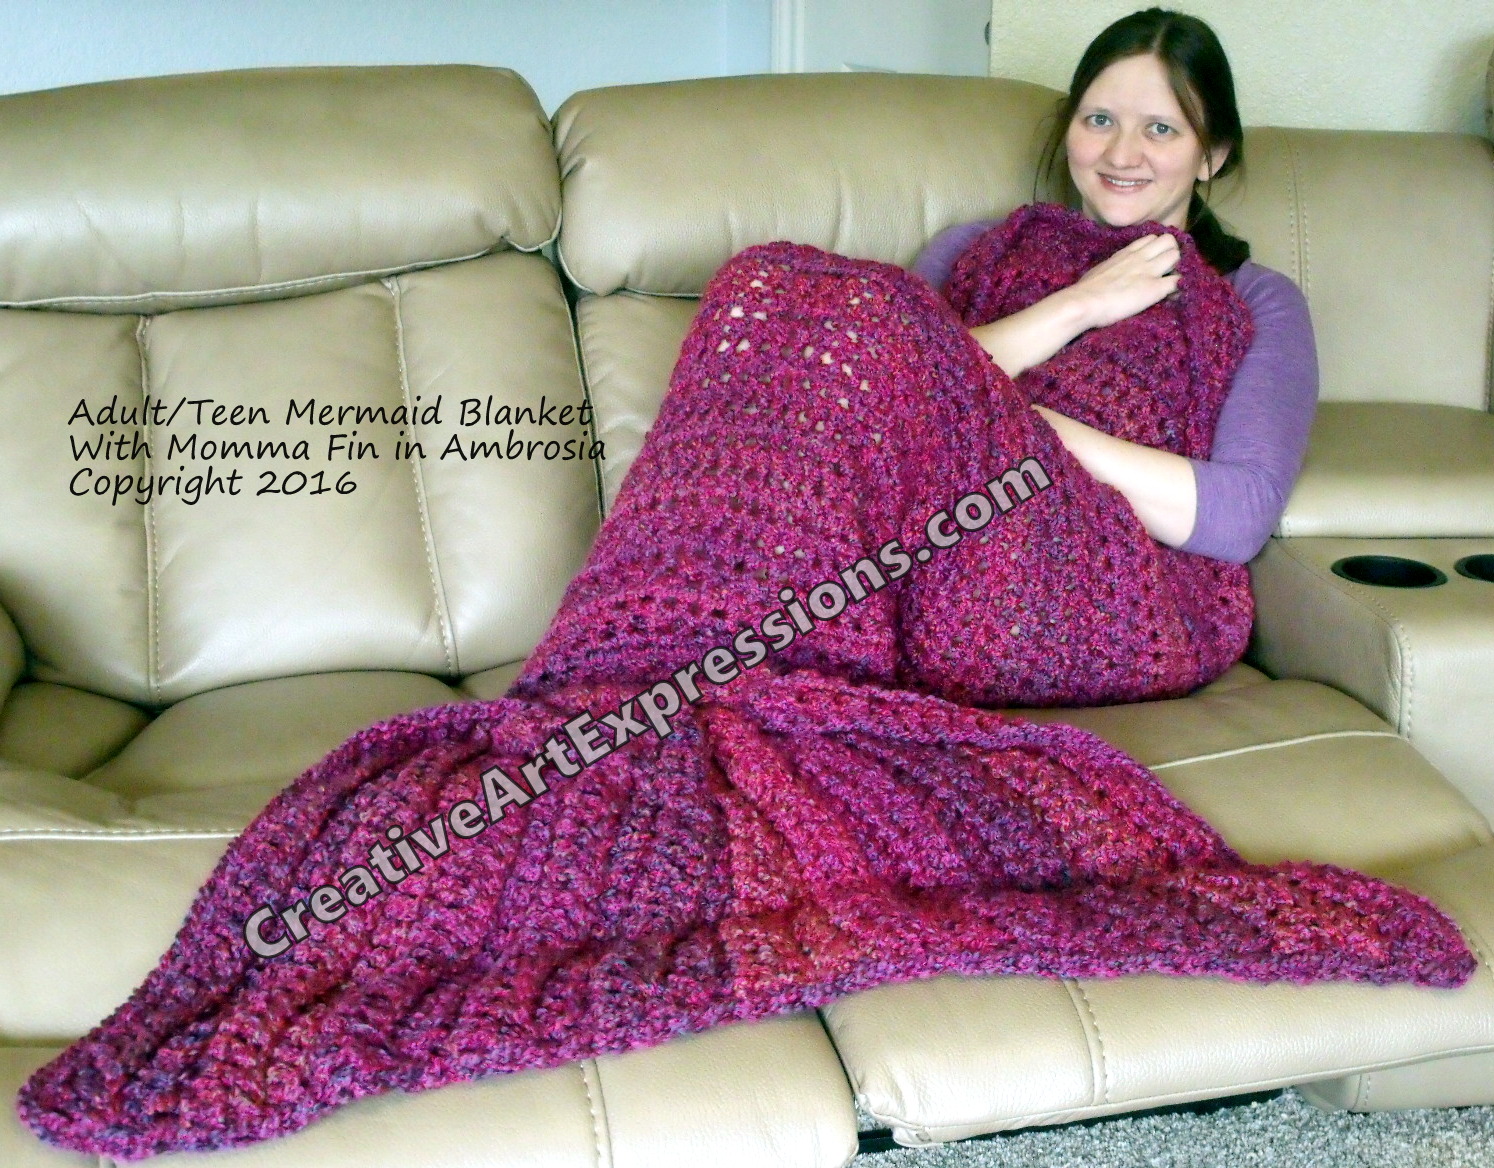 Mermaid Blanket Adult/Teen Momma Fin in Ambrosia